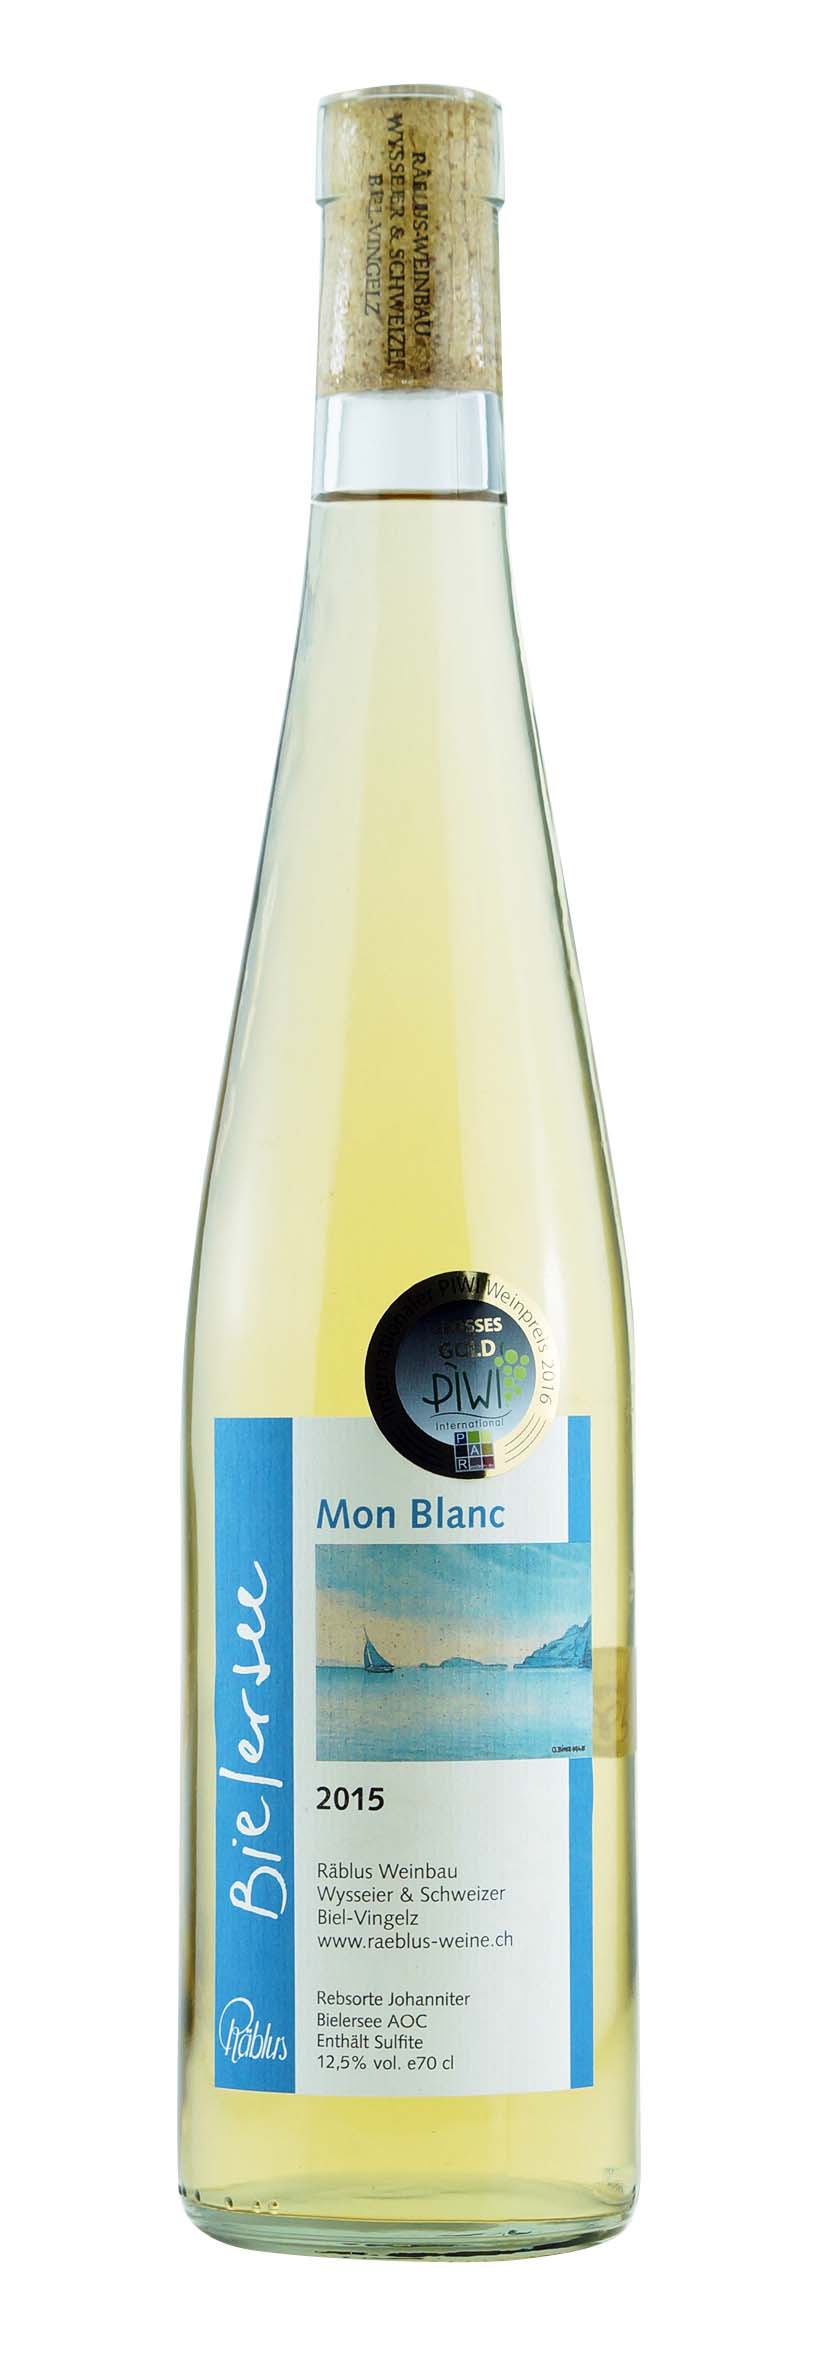 Bielersee AOC Mon Blanc Johanniter 2015